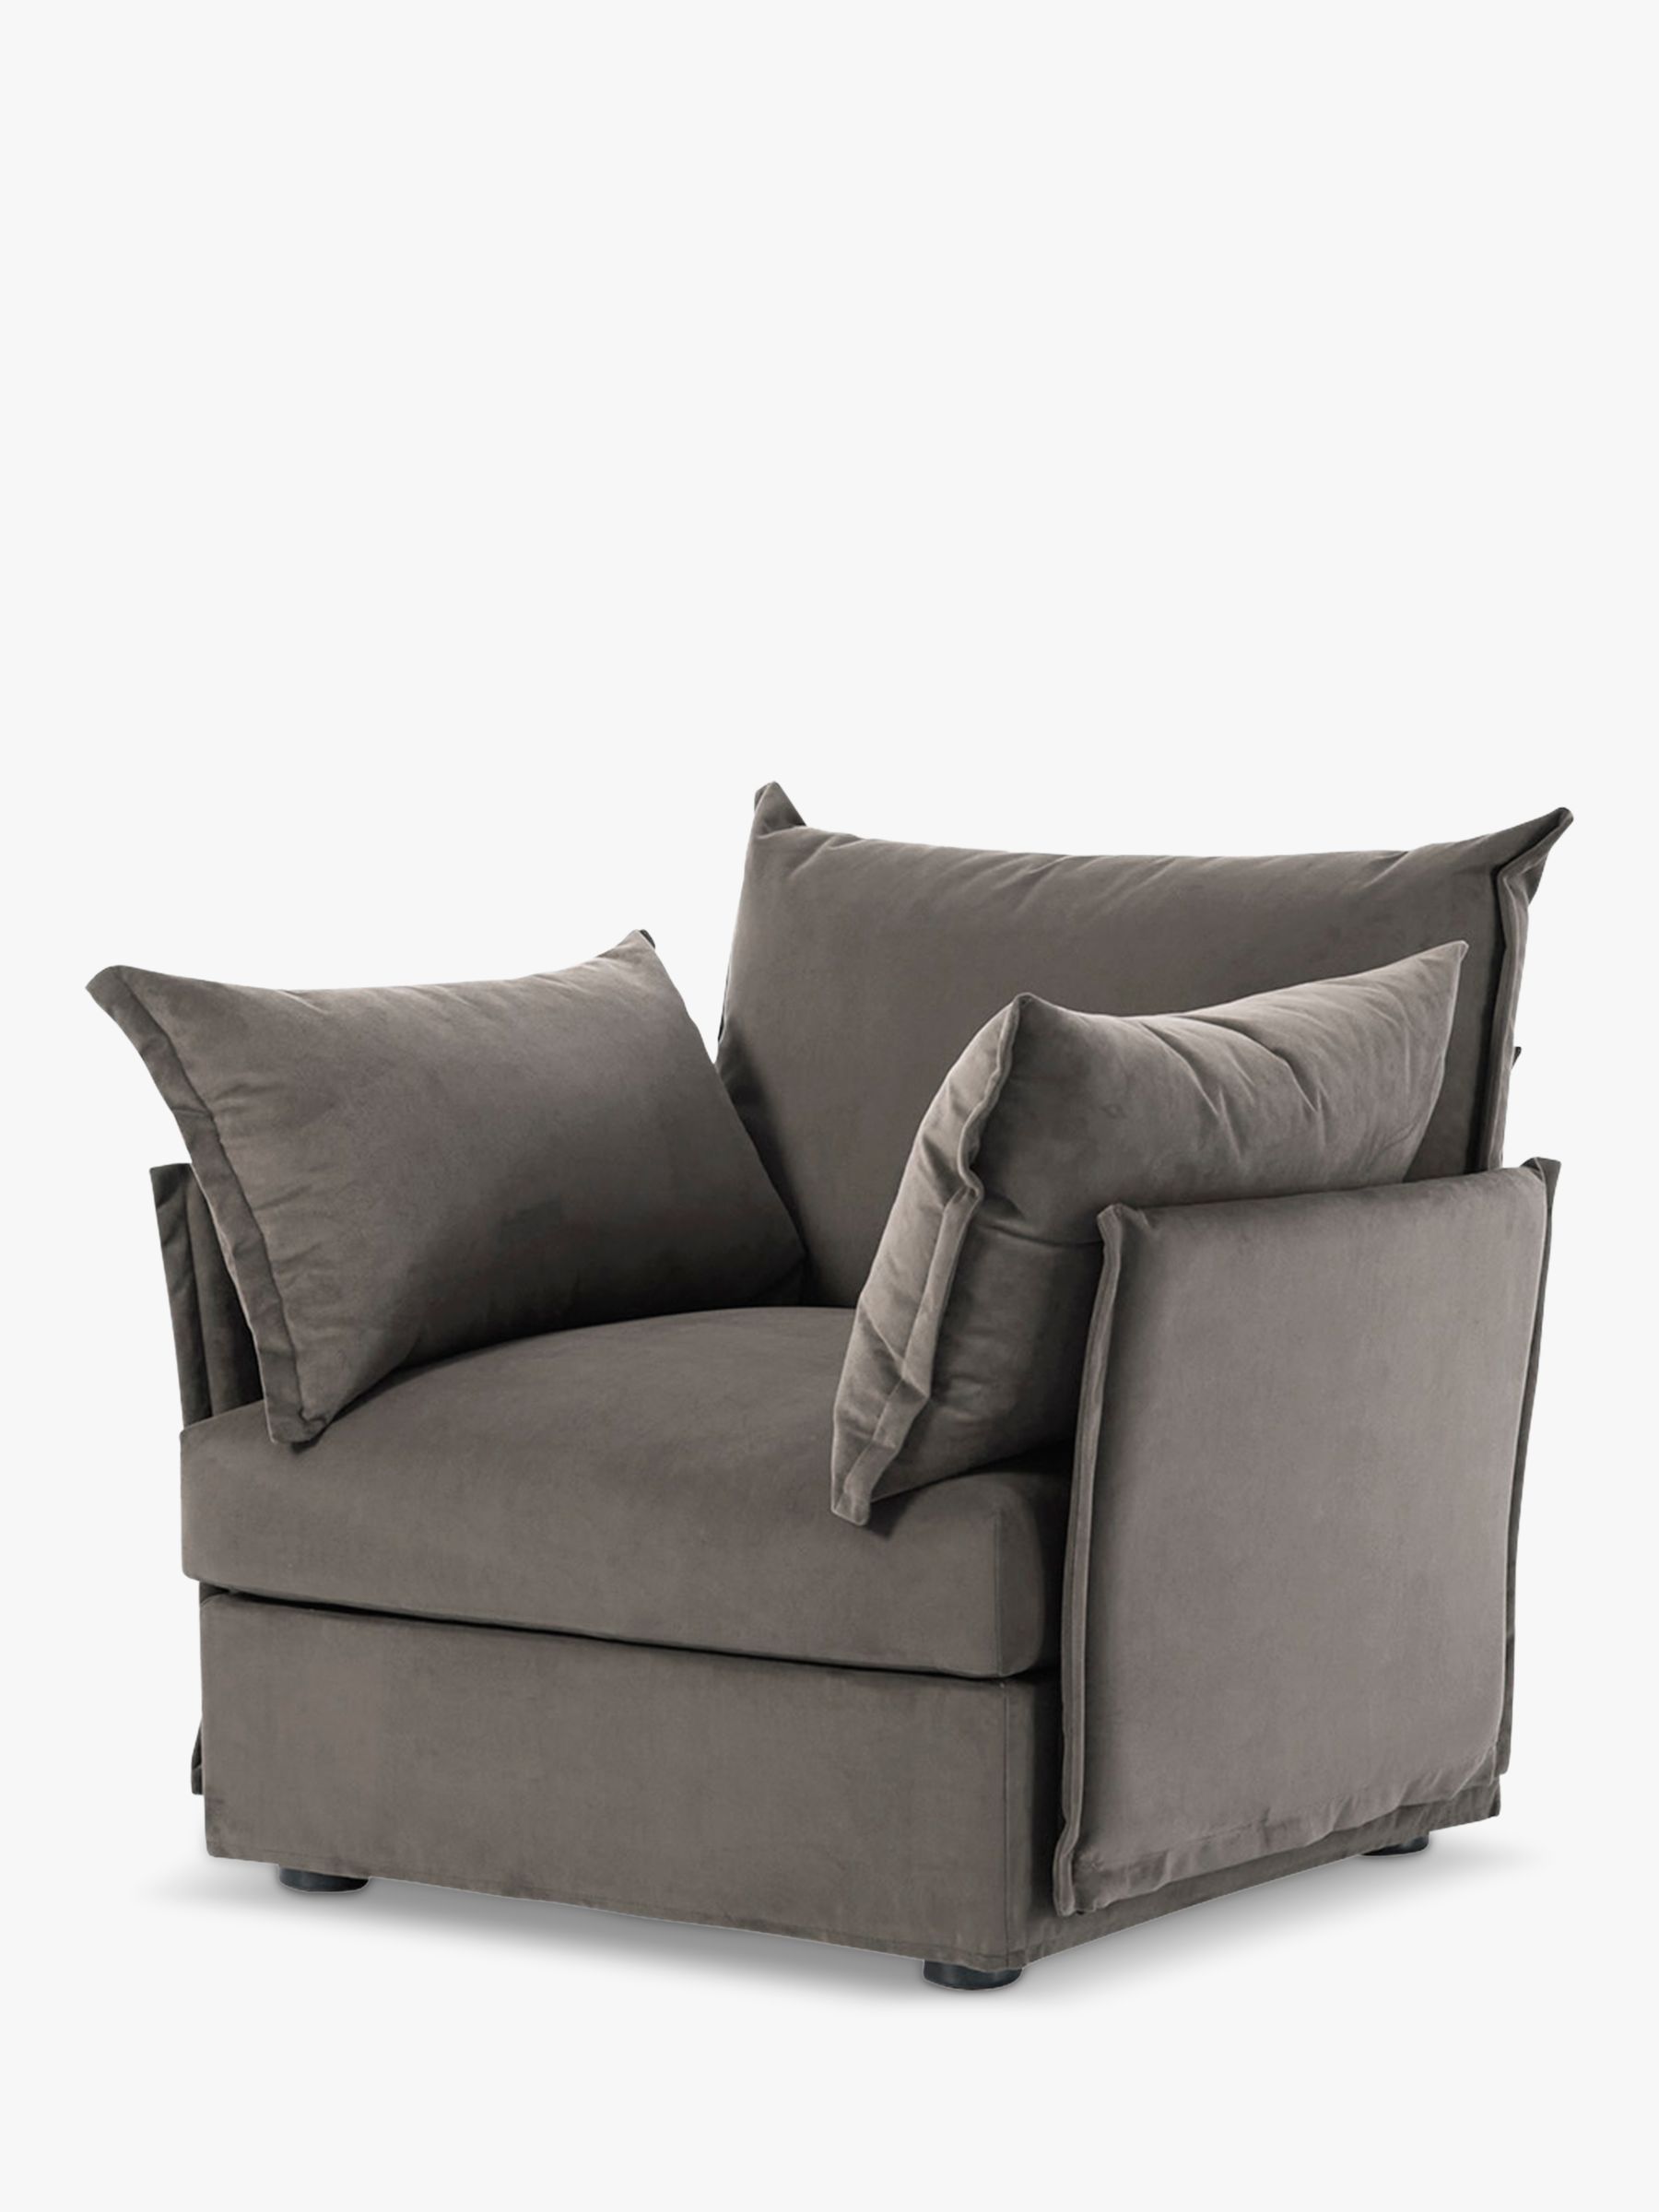 Photo of Swyft model 06 armchair